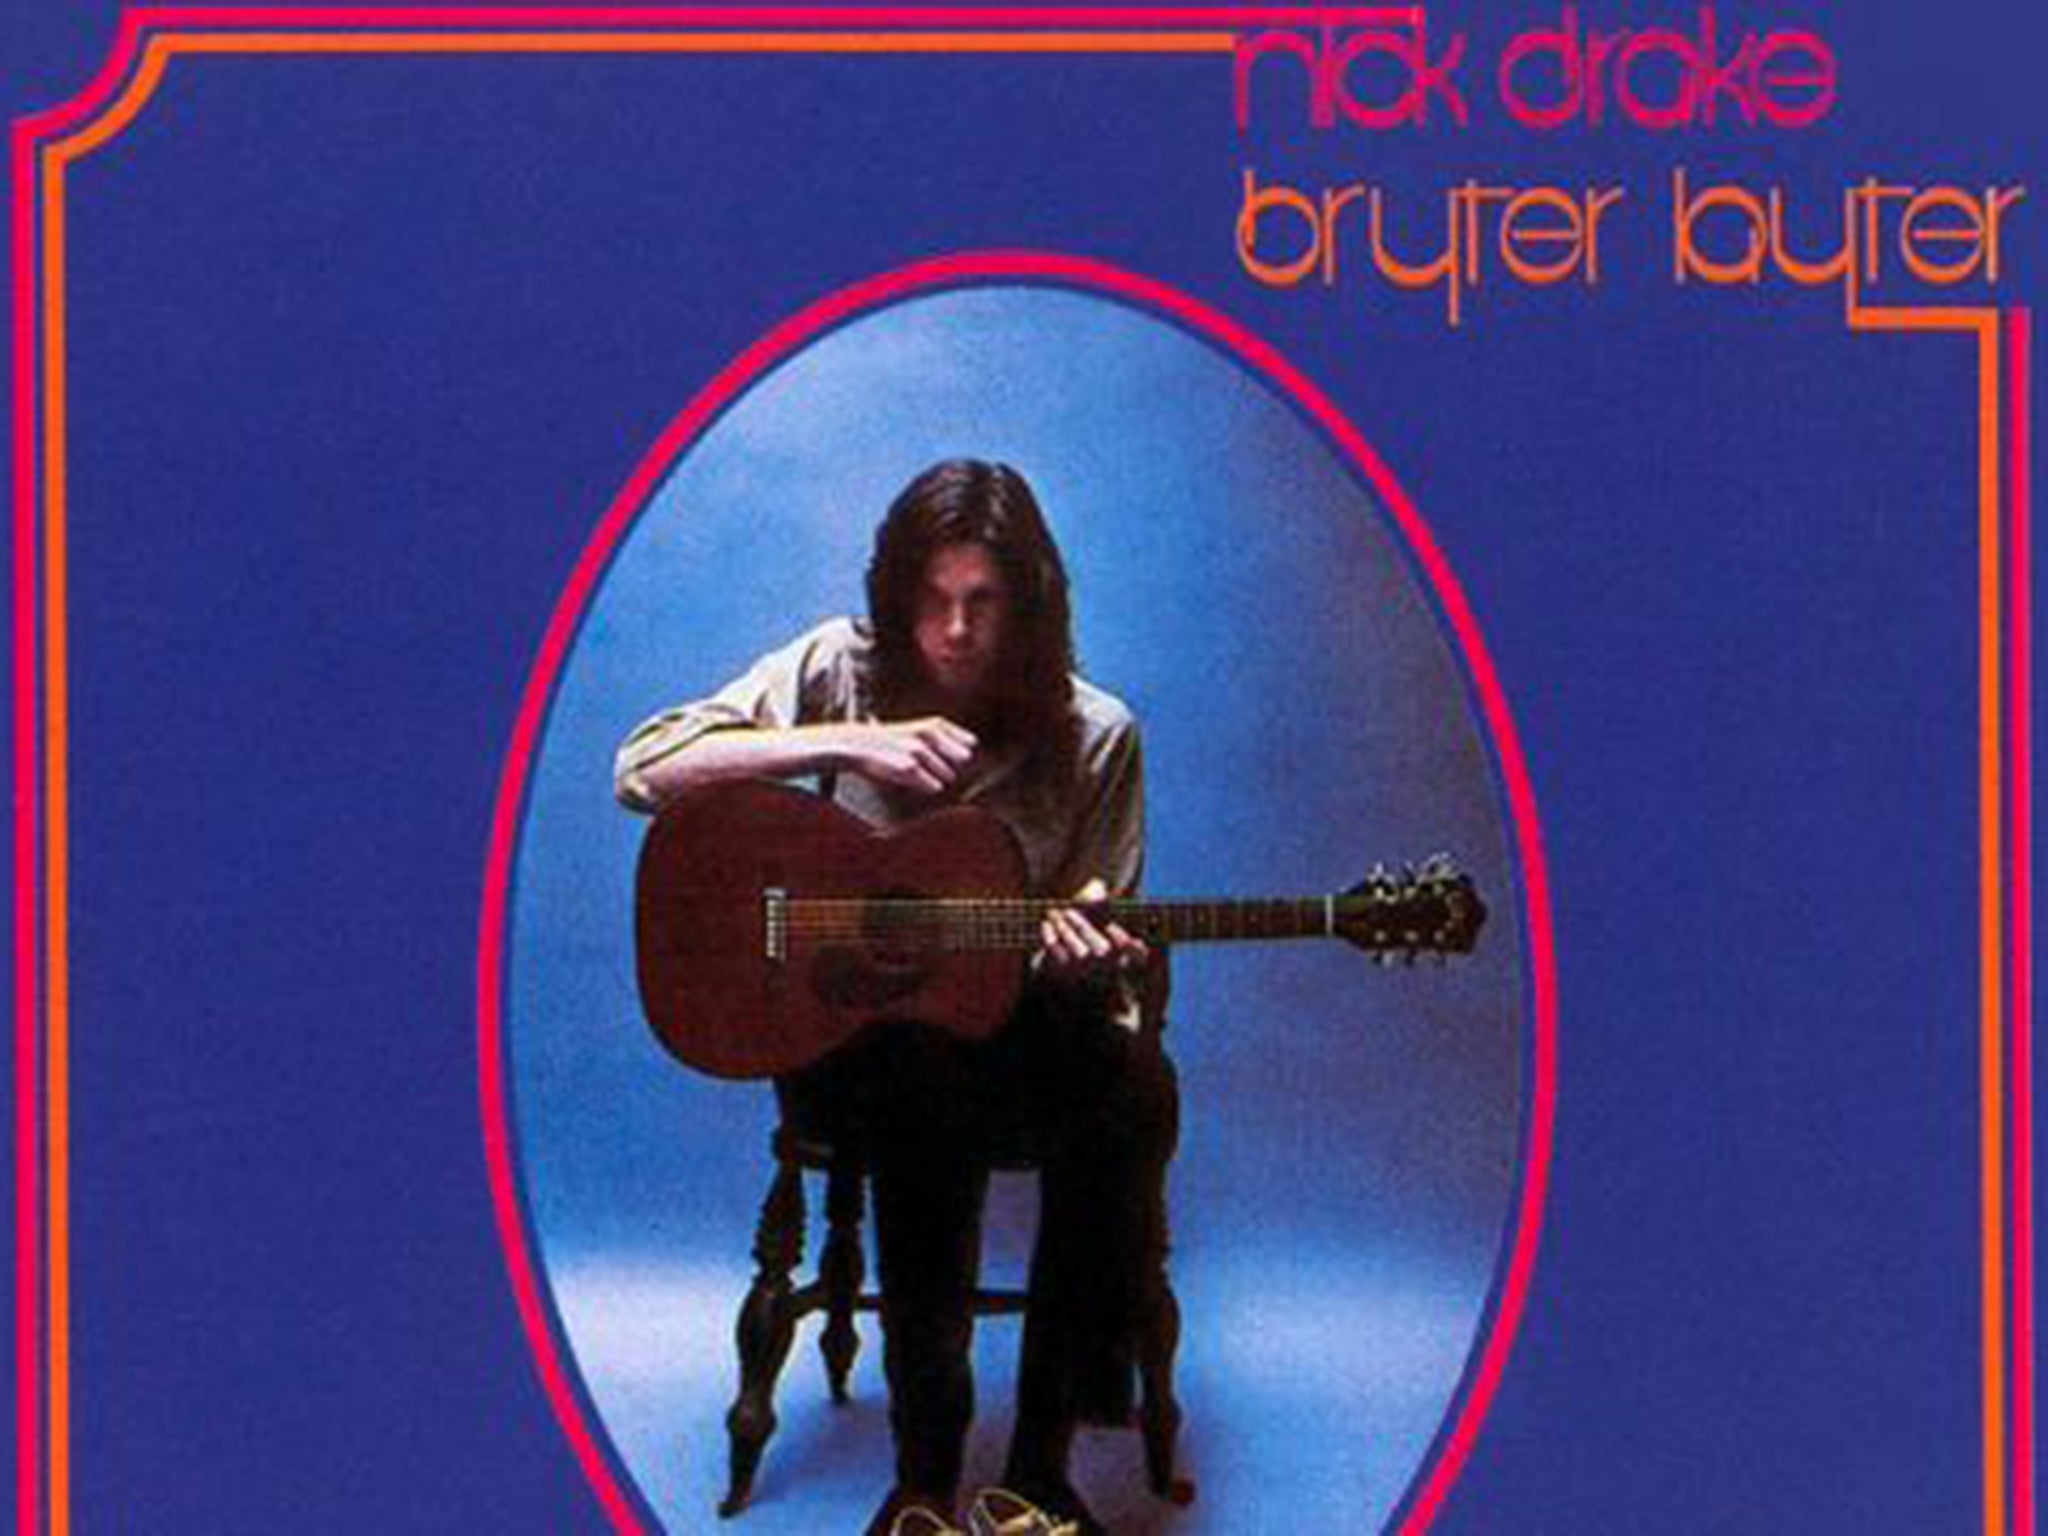 Nick Drake’s classic 1970 album Bryter Layter